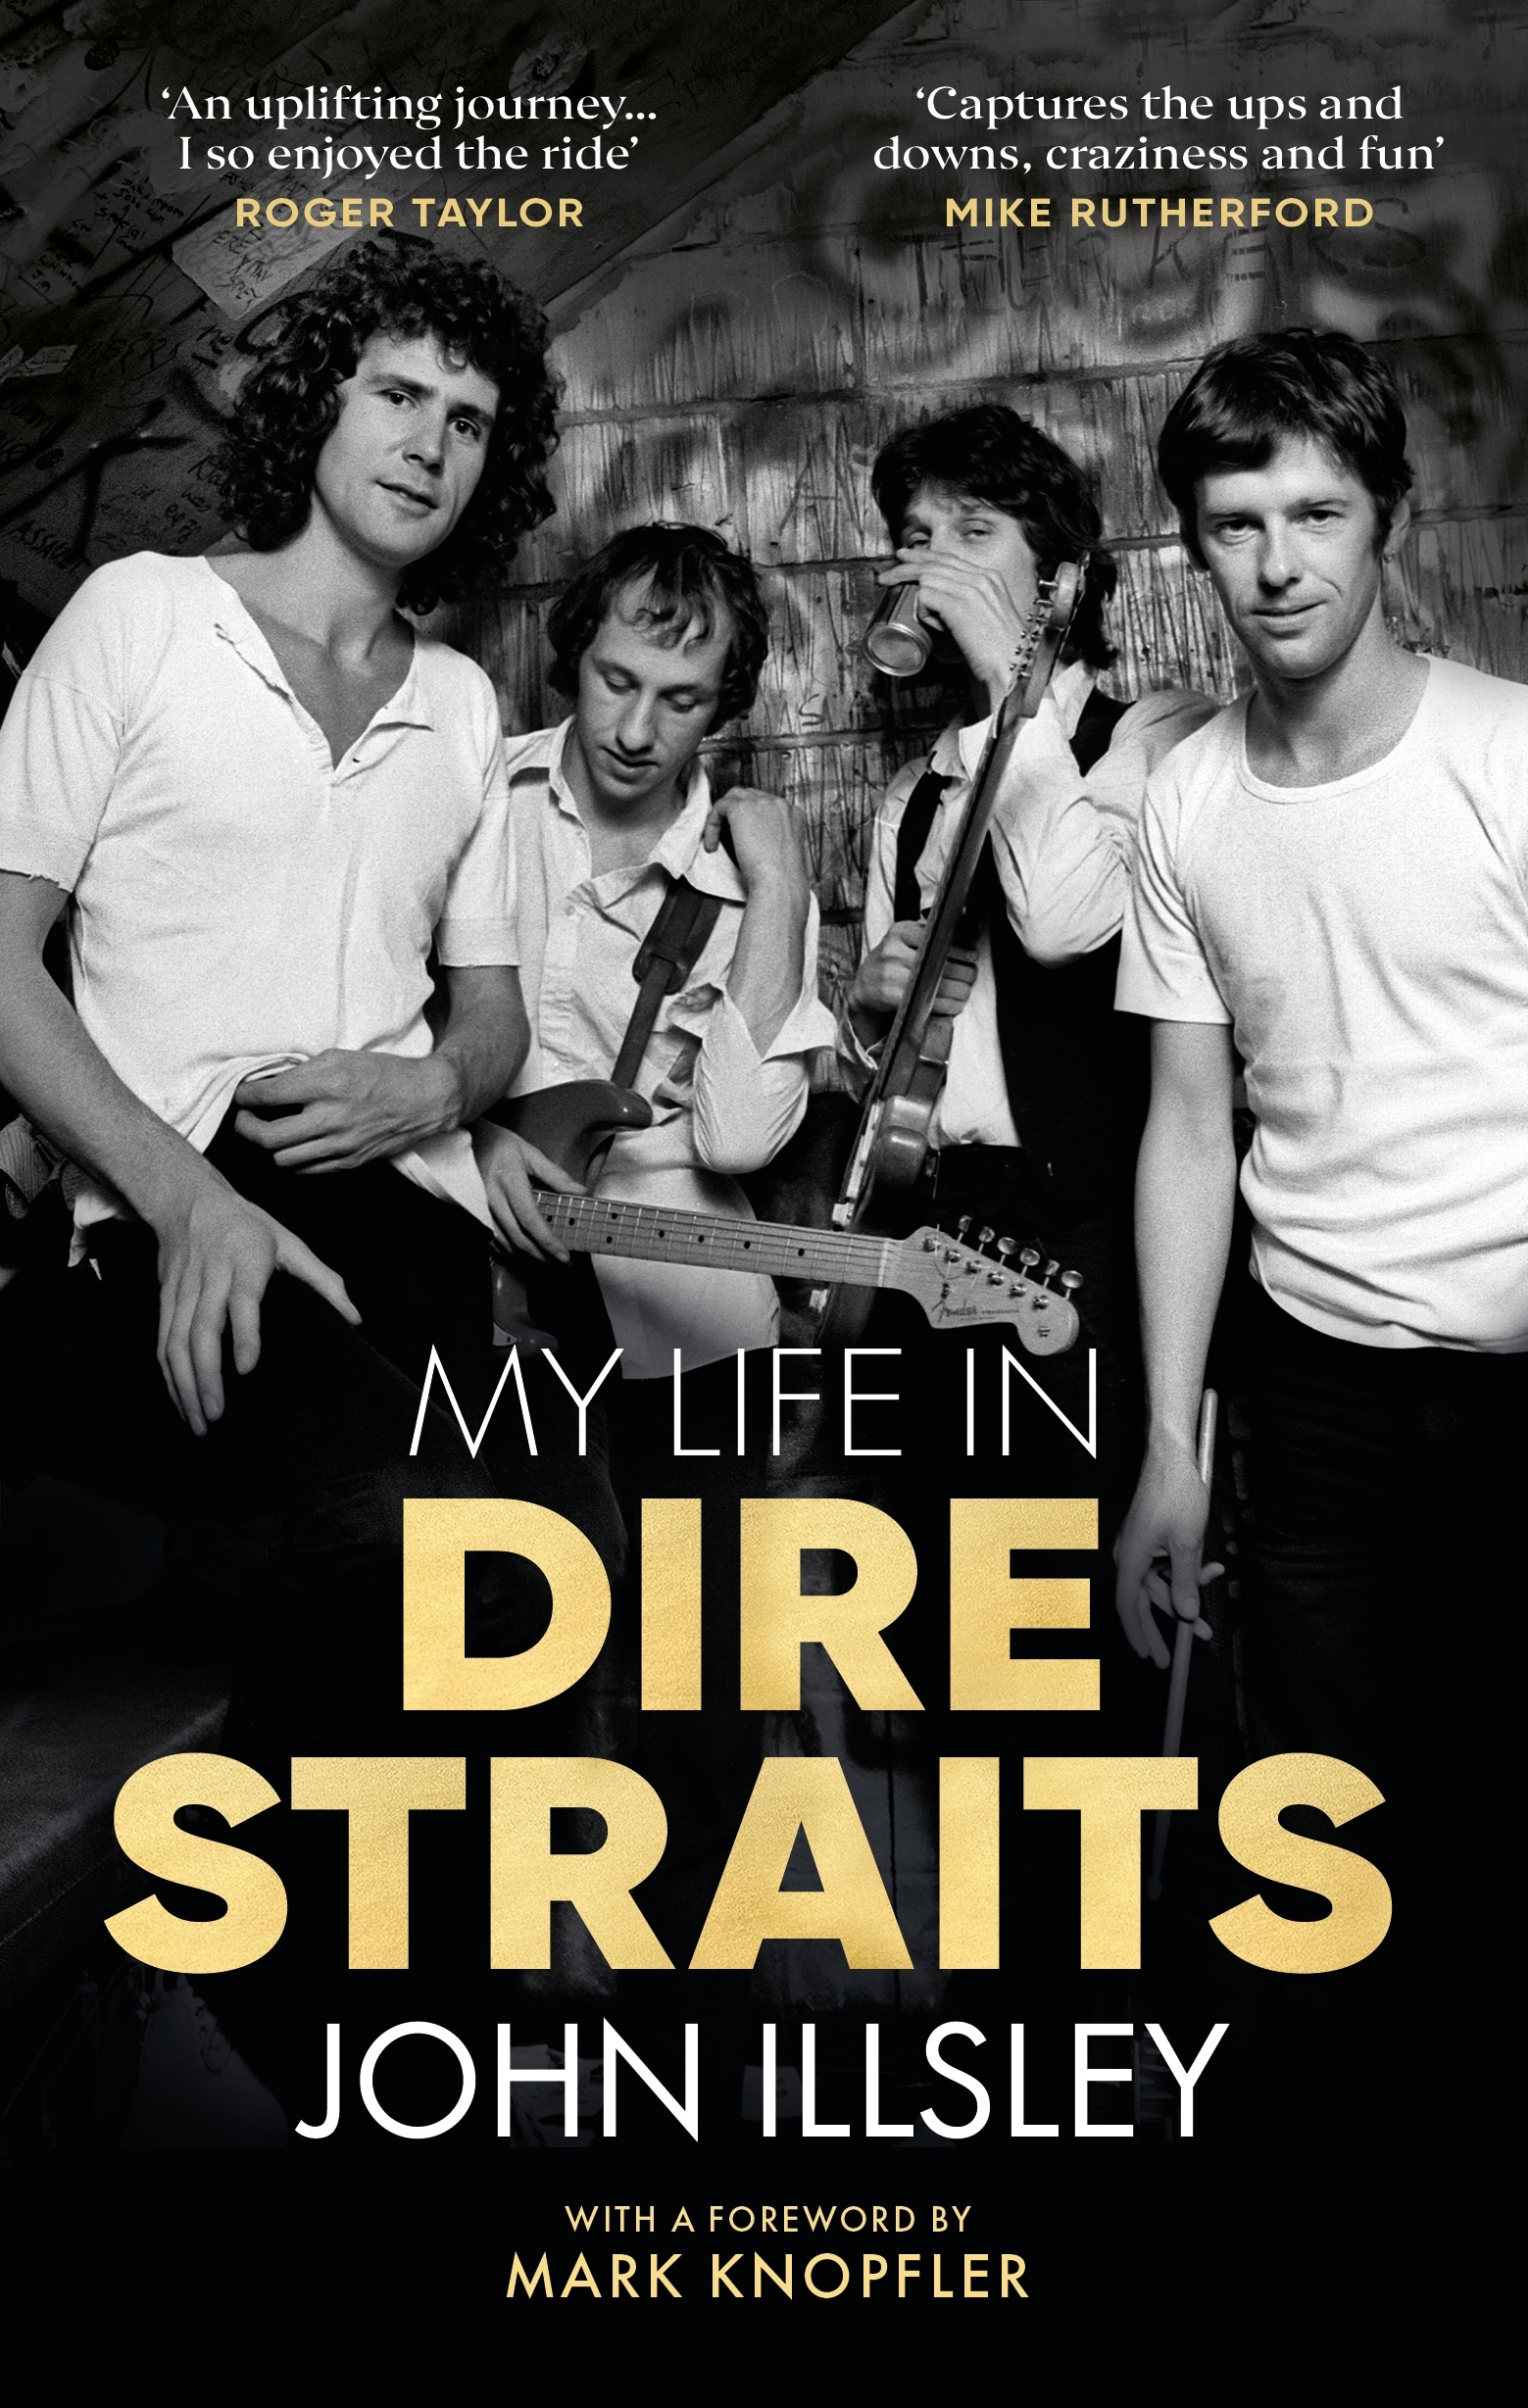 Book “My Life in Dire Straits” by John Illsley — November 11, 2021